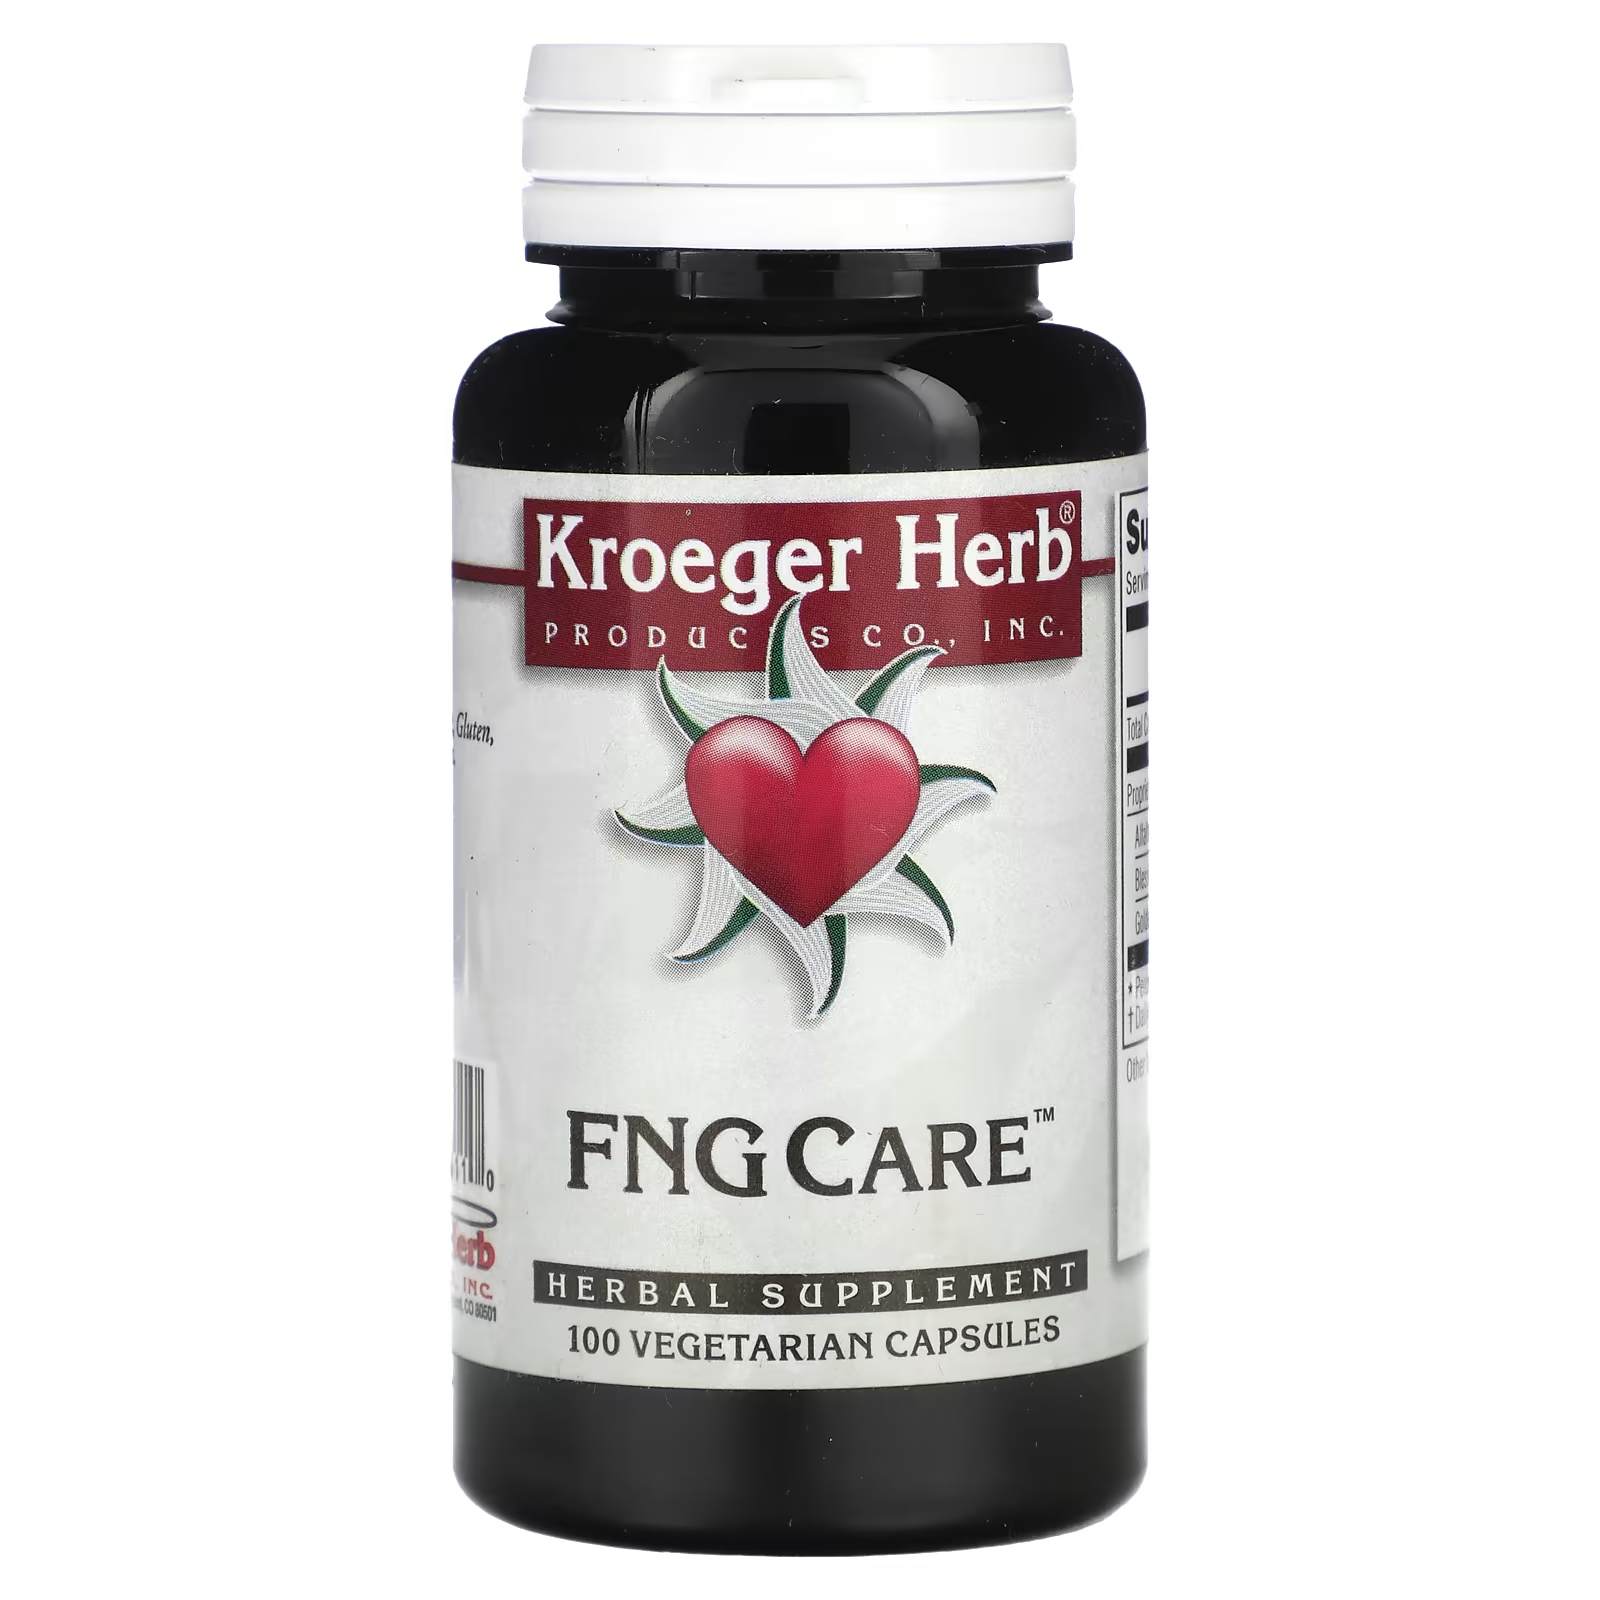 Растительная добавка Kroeger Herb Co FNG Care, 100 капсул растительная добавка kroeger herb co балансировщик полярности 100 капсул